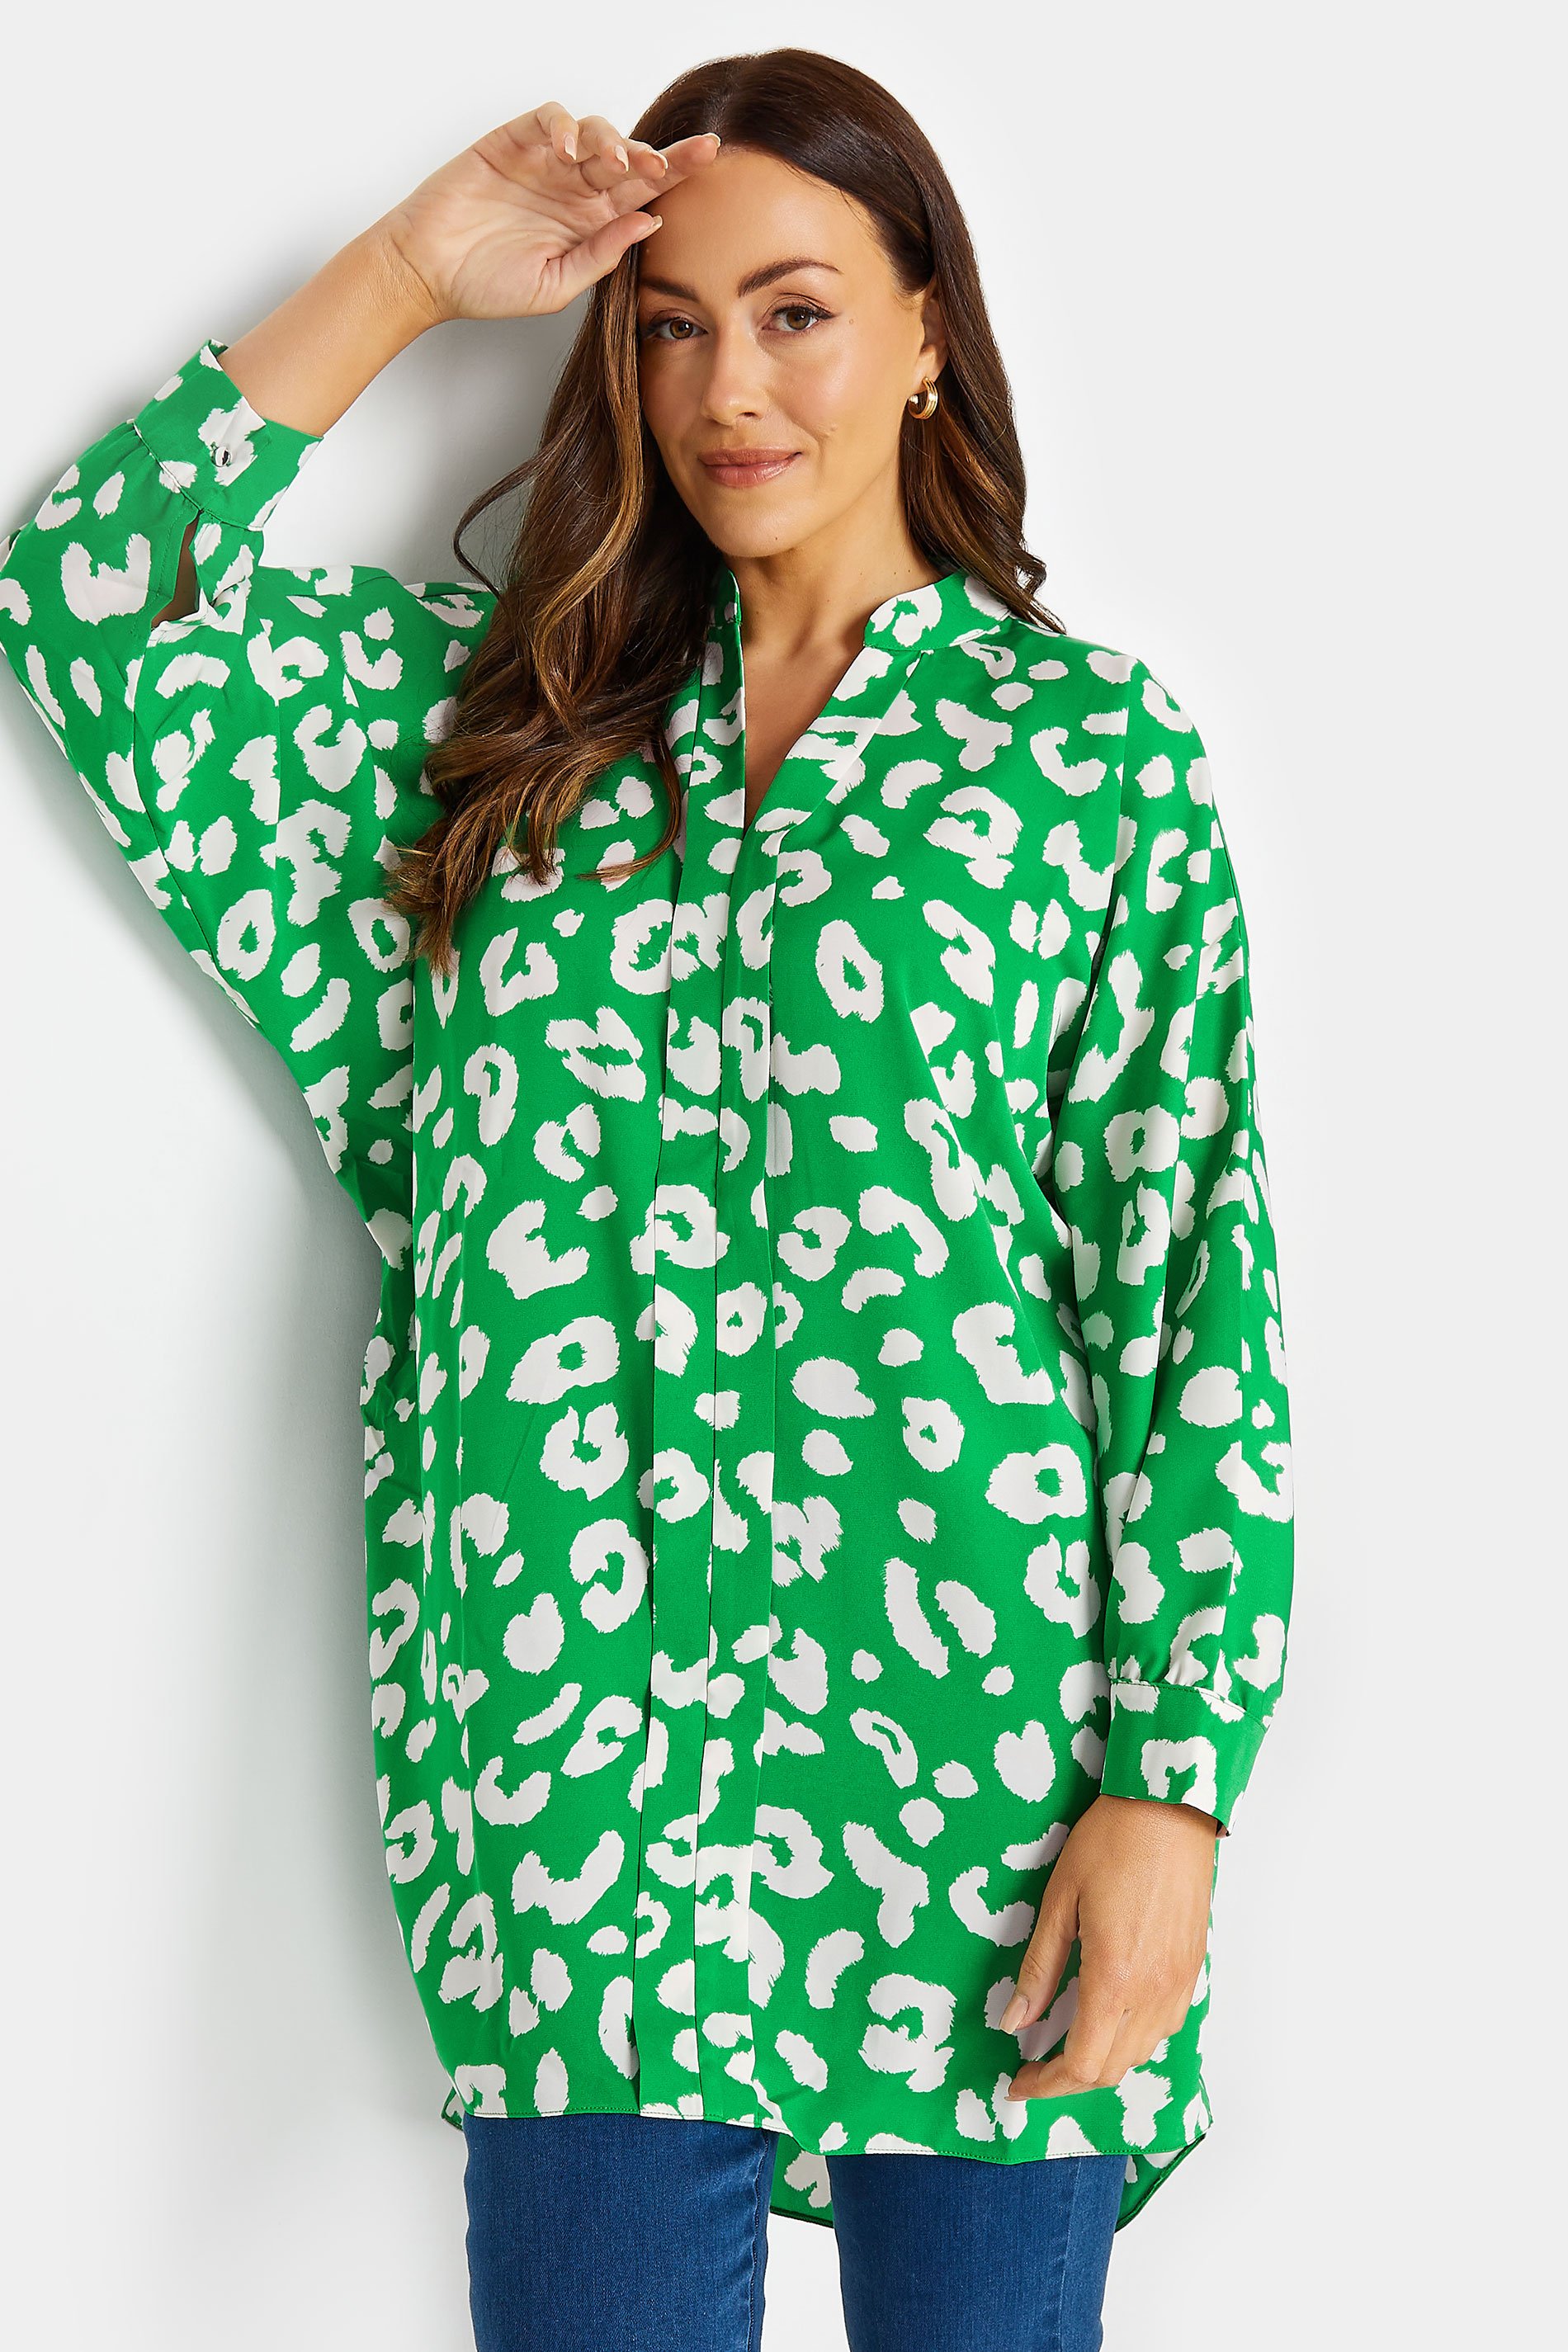 M&Co Green Leopard Print Blouse  | M&Co 1